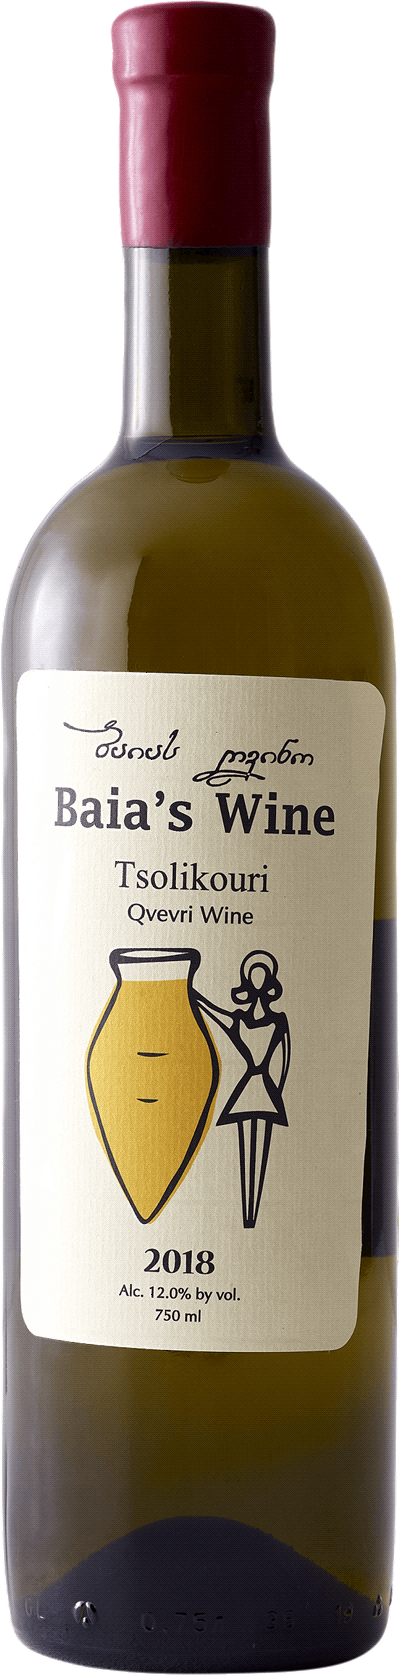 Baia's Wine Tsolikouri Qvevri Wine